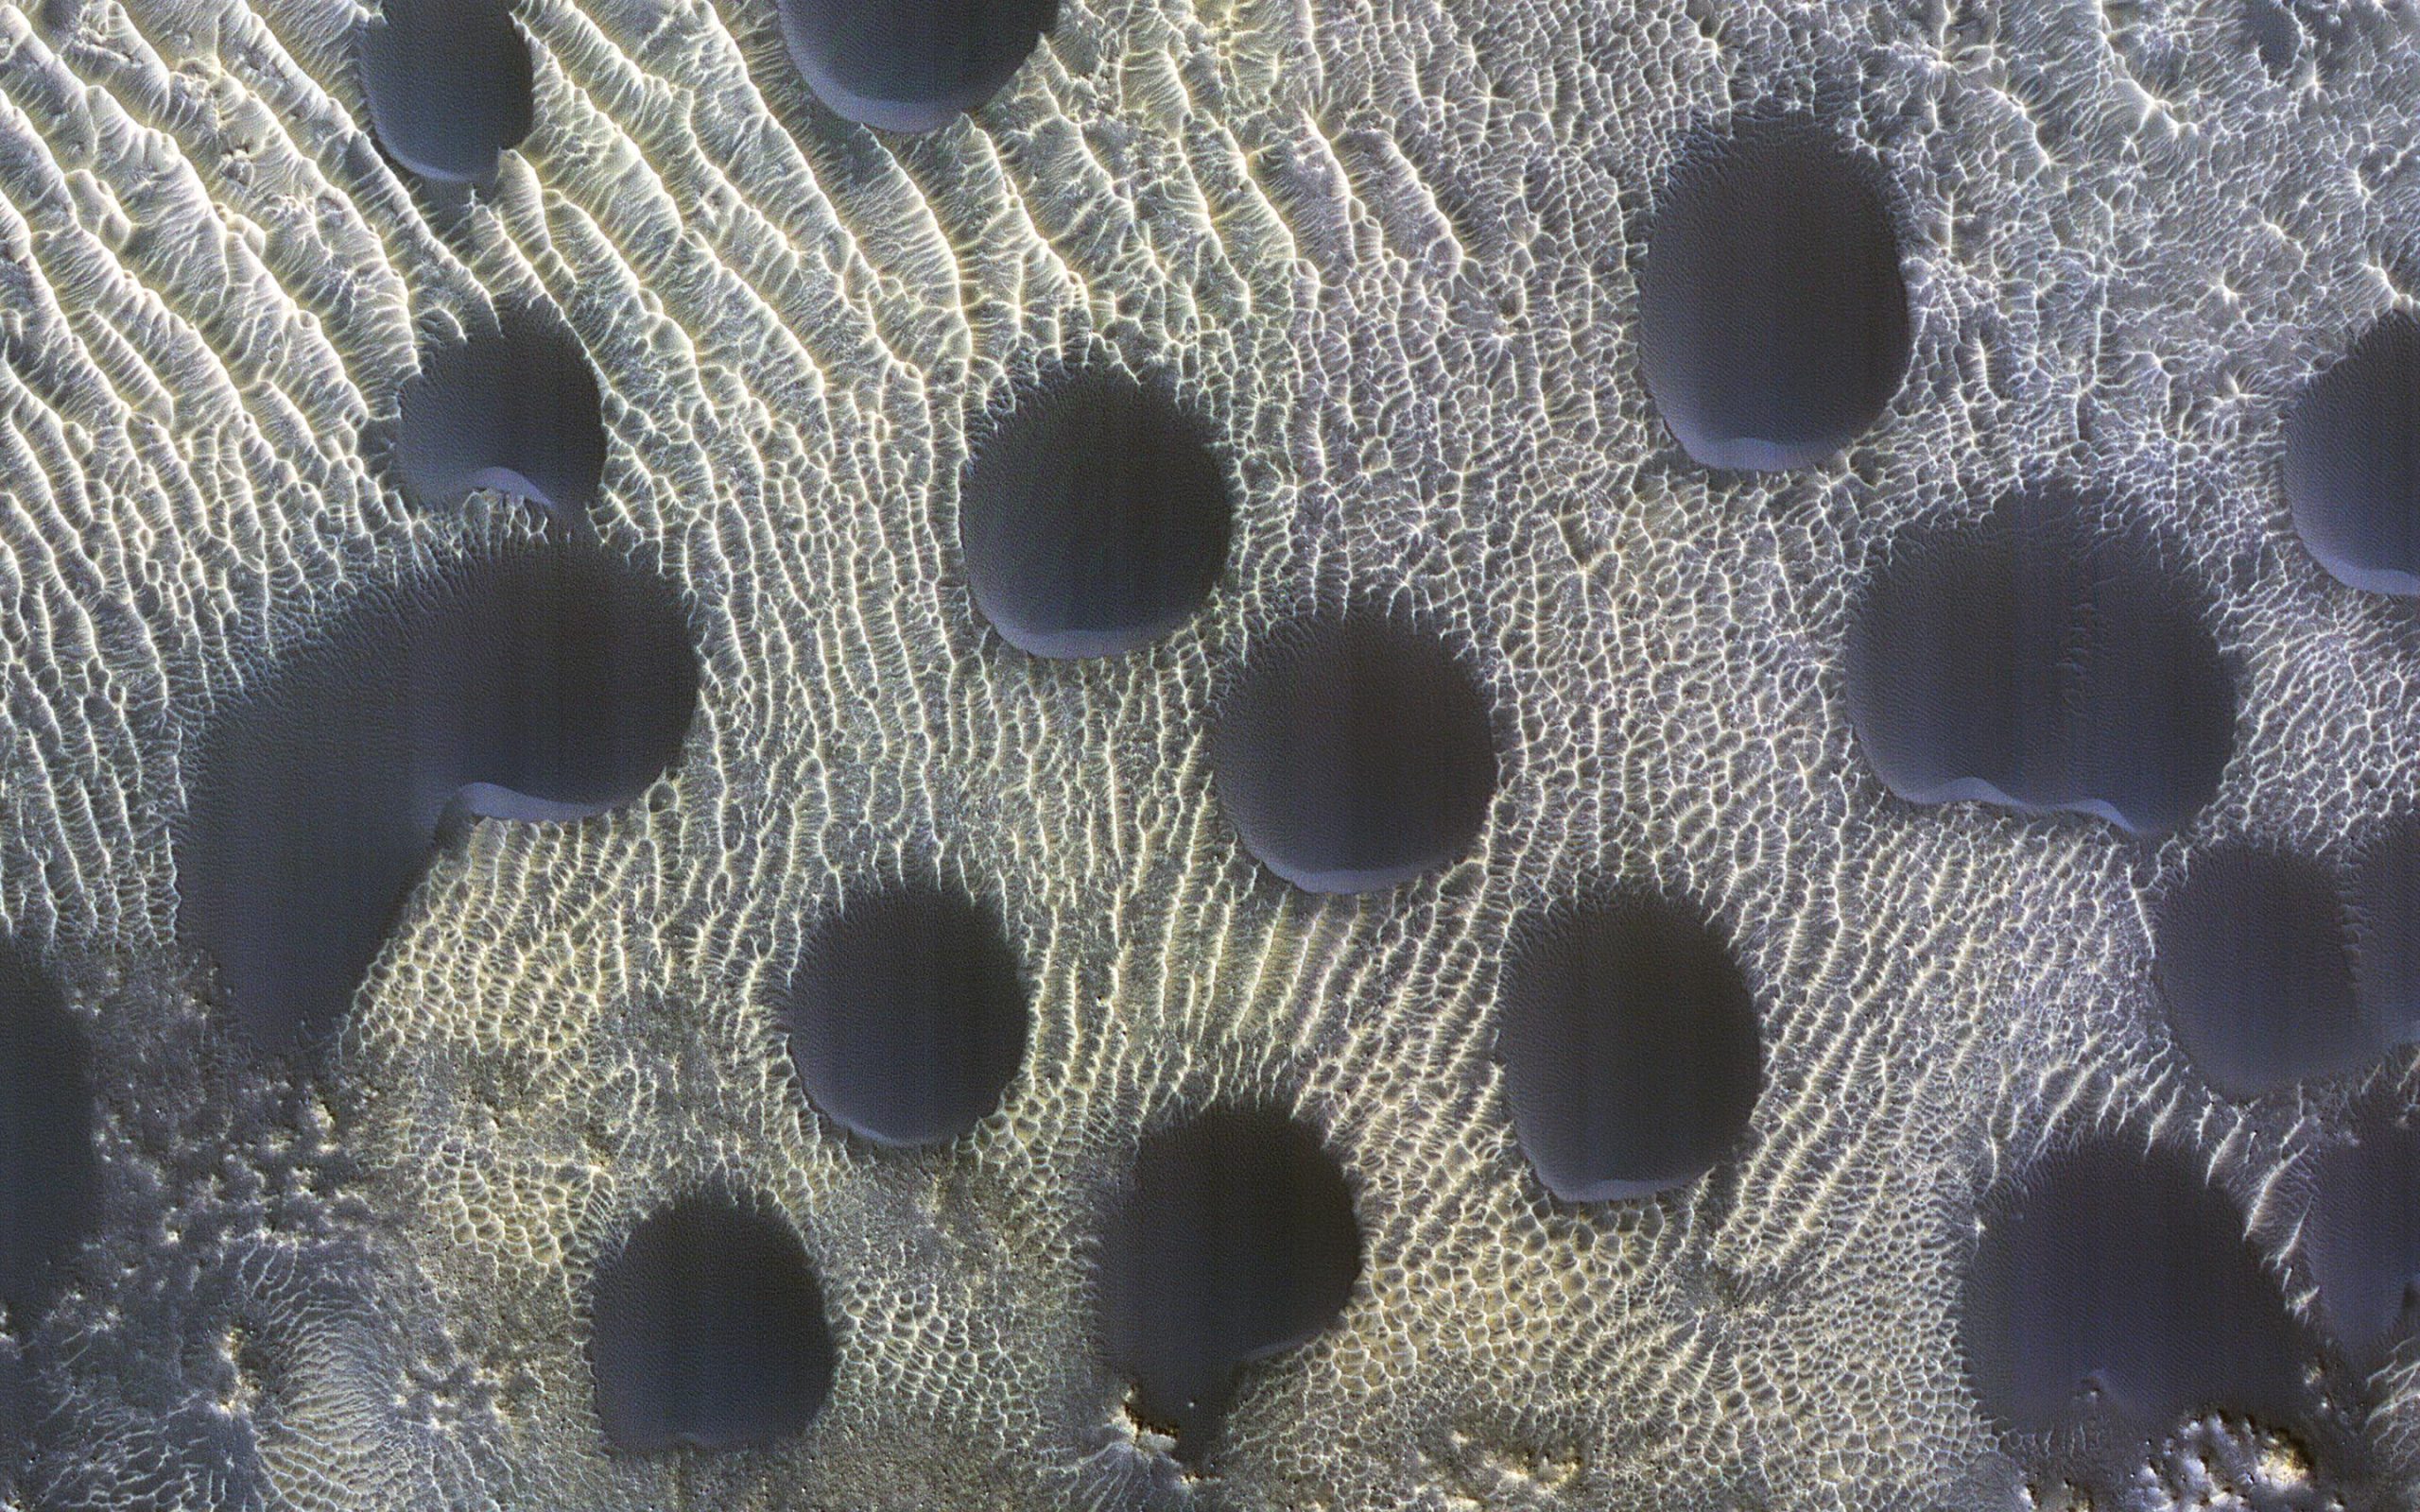 Sand dunes on Mars as seen by the MRO. Image Credit: NASA/JPL-Caltech/University of Arizona.